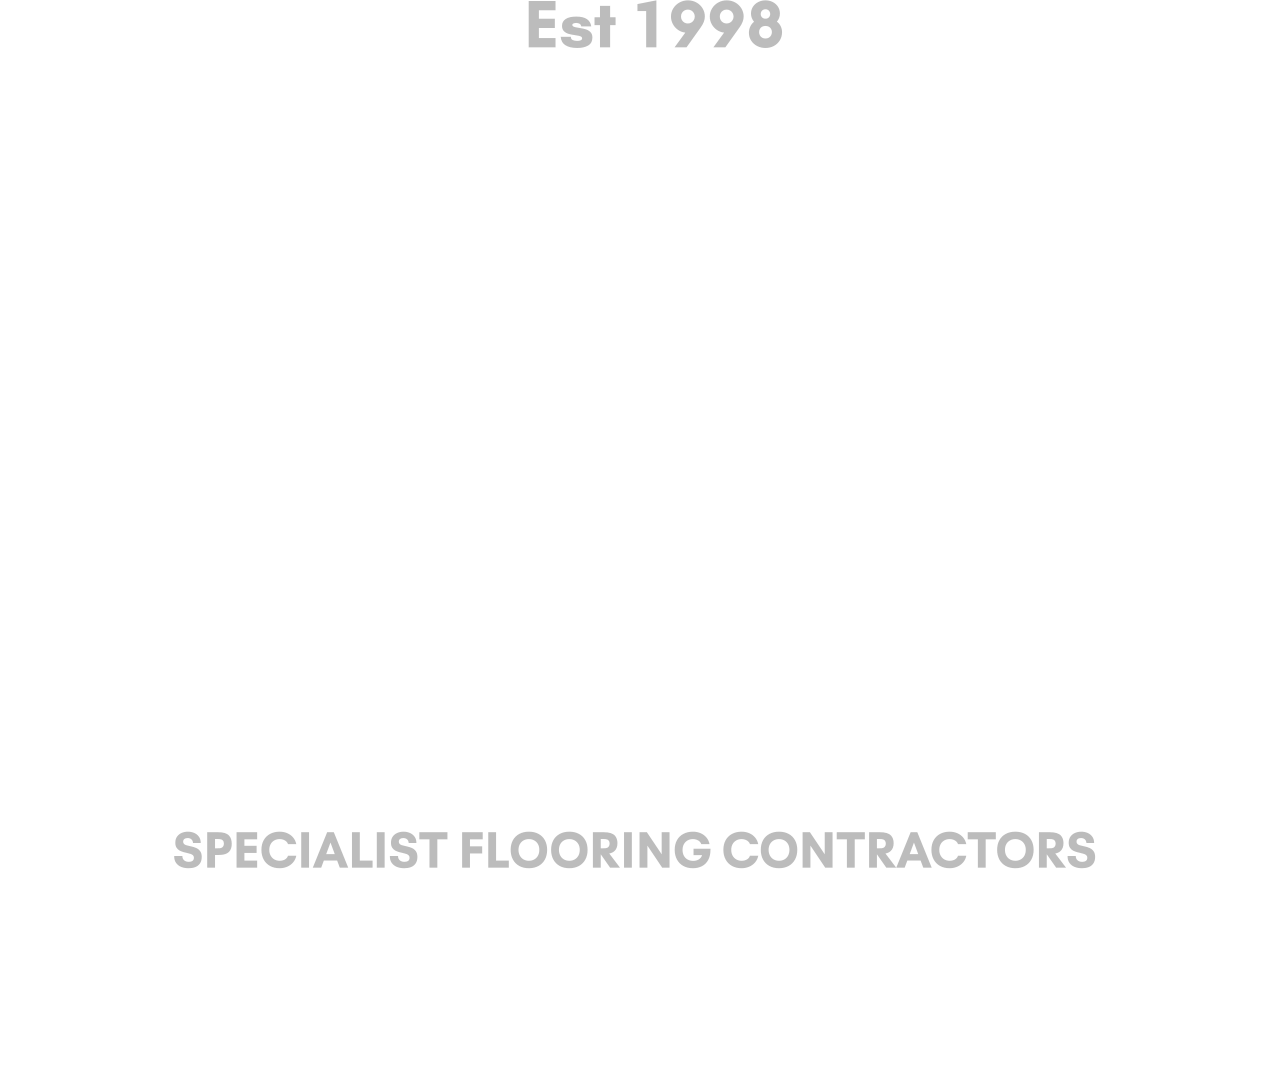 Arrow flooring services ltd 's logo